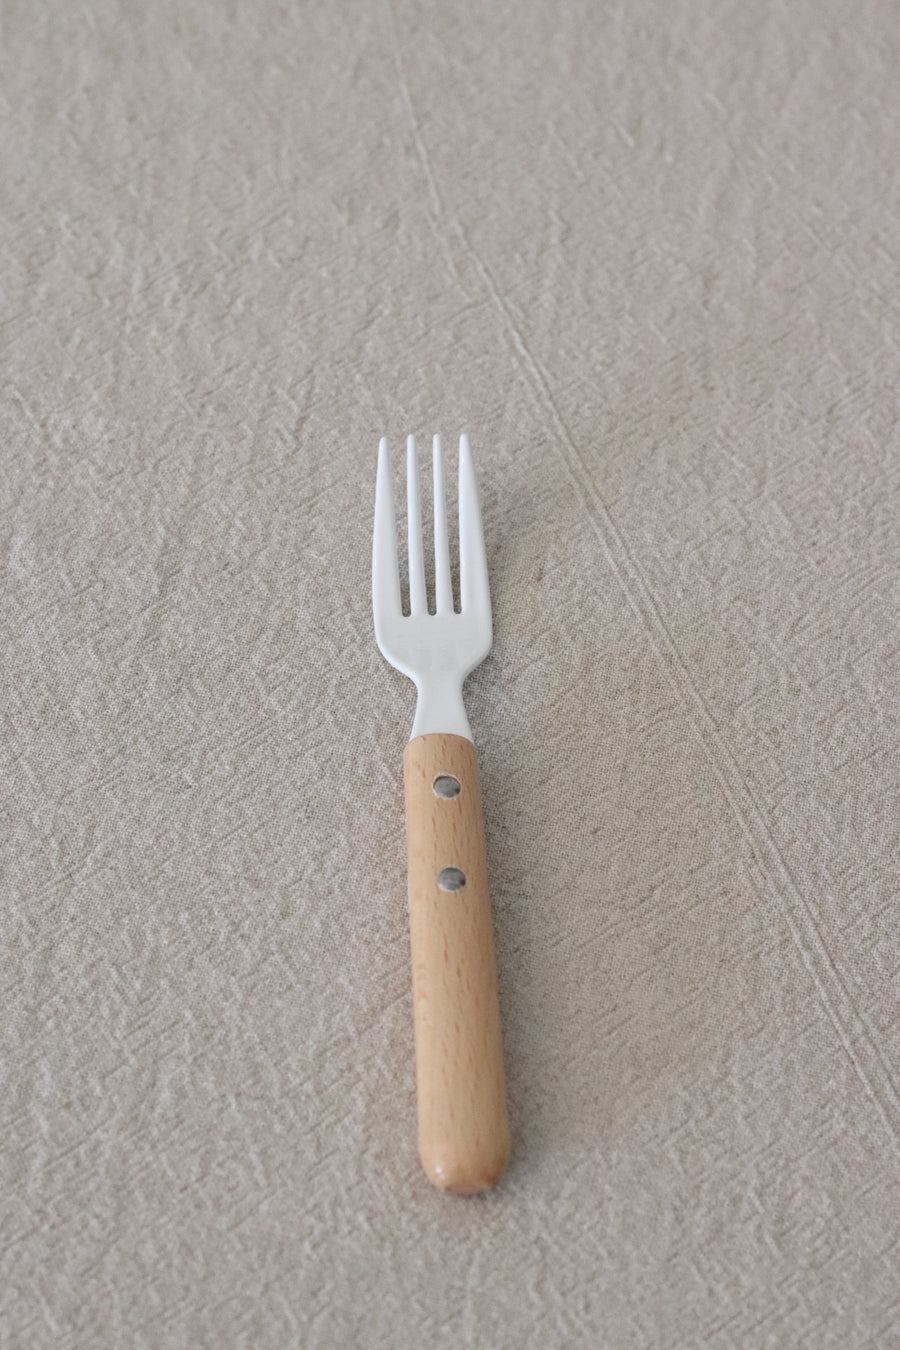 Japanese Enamel Cutlery Set-Wooden Handle